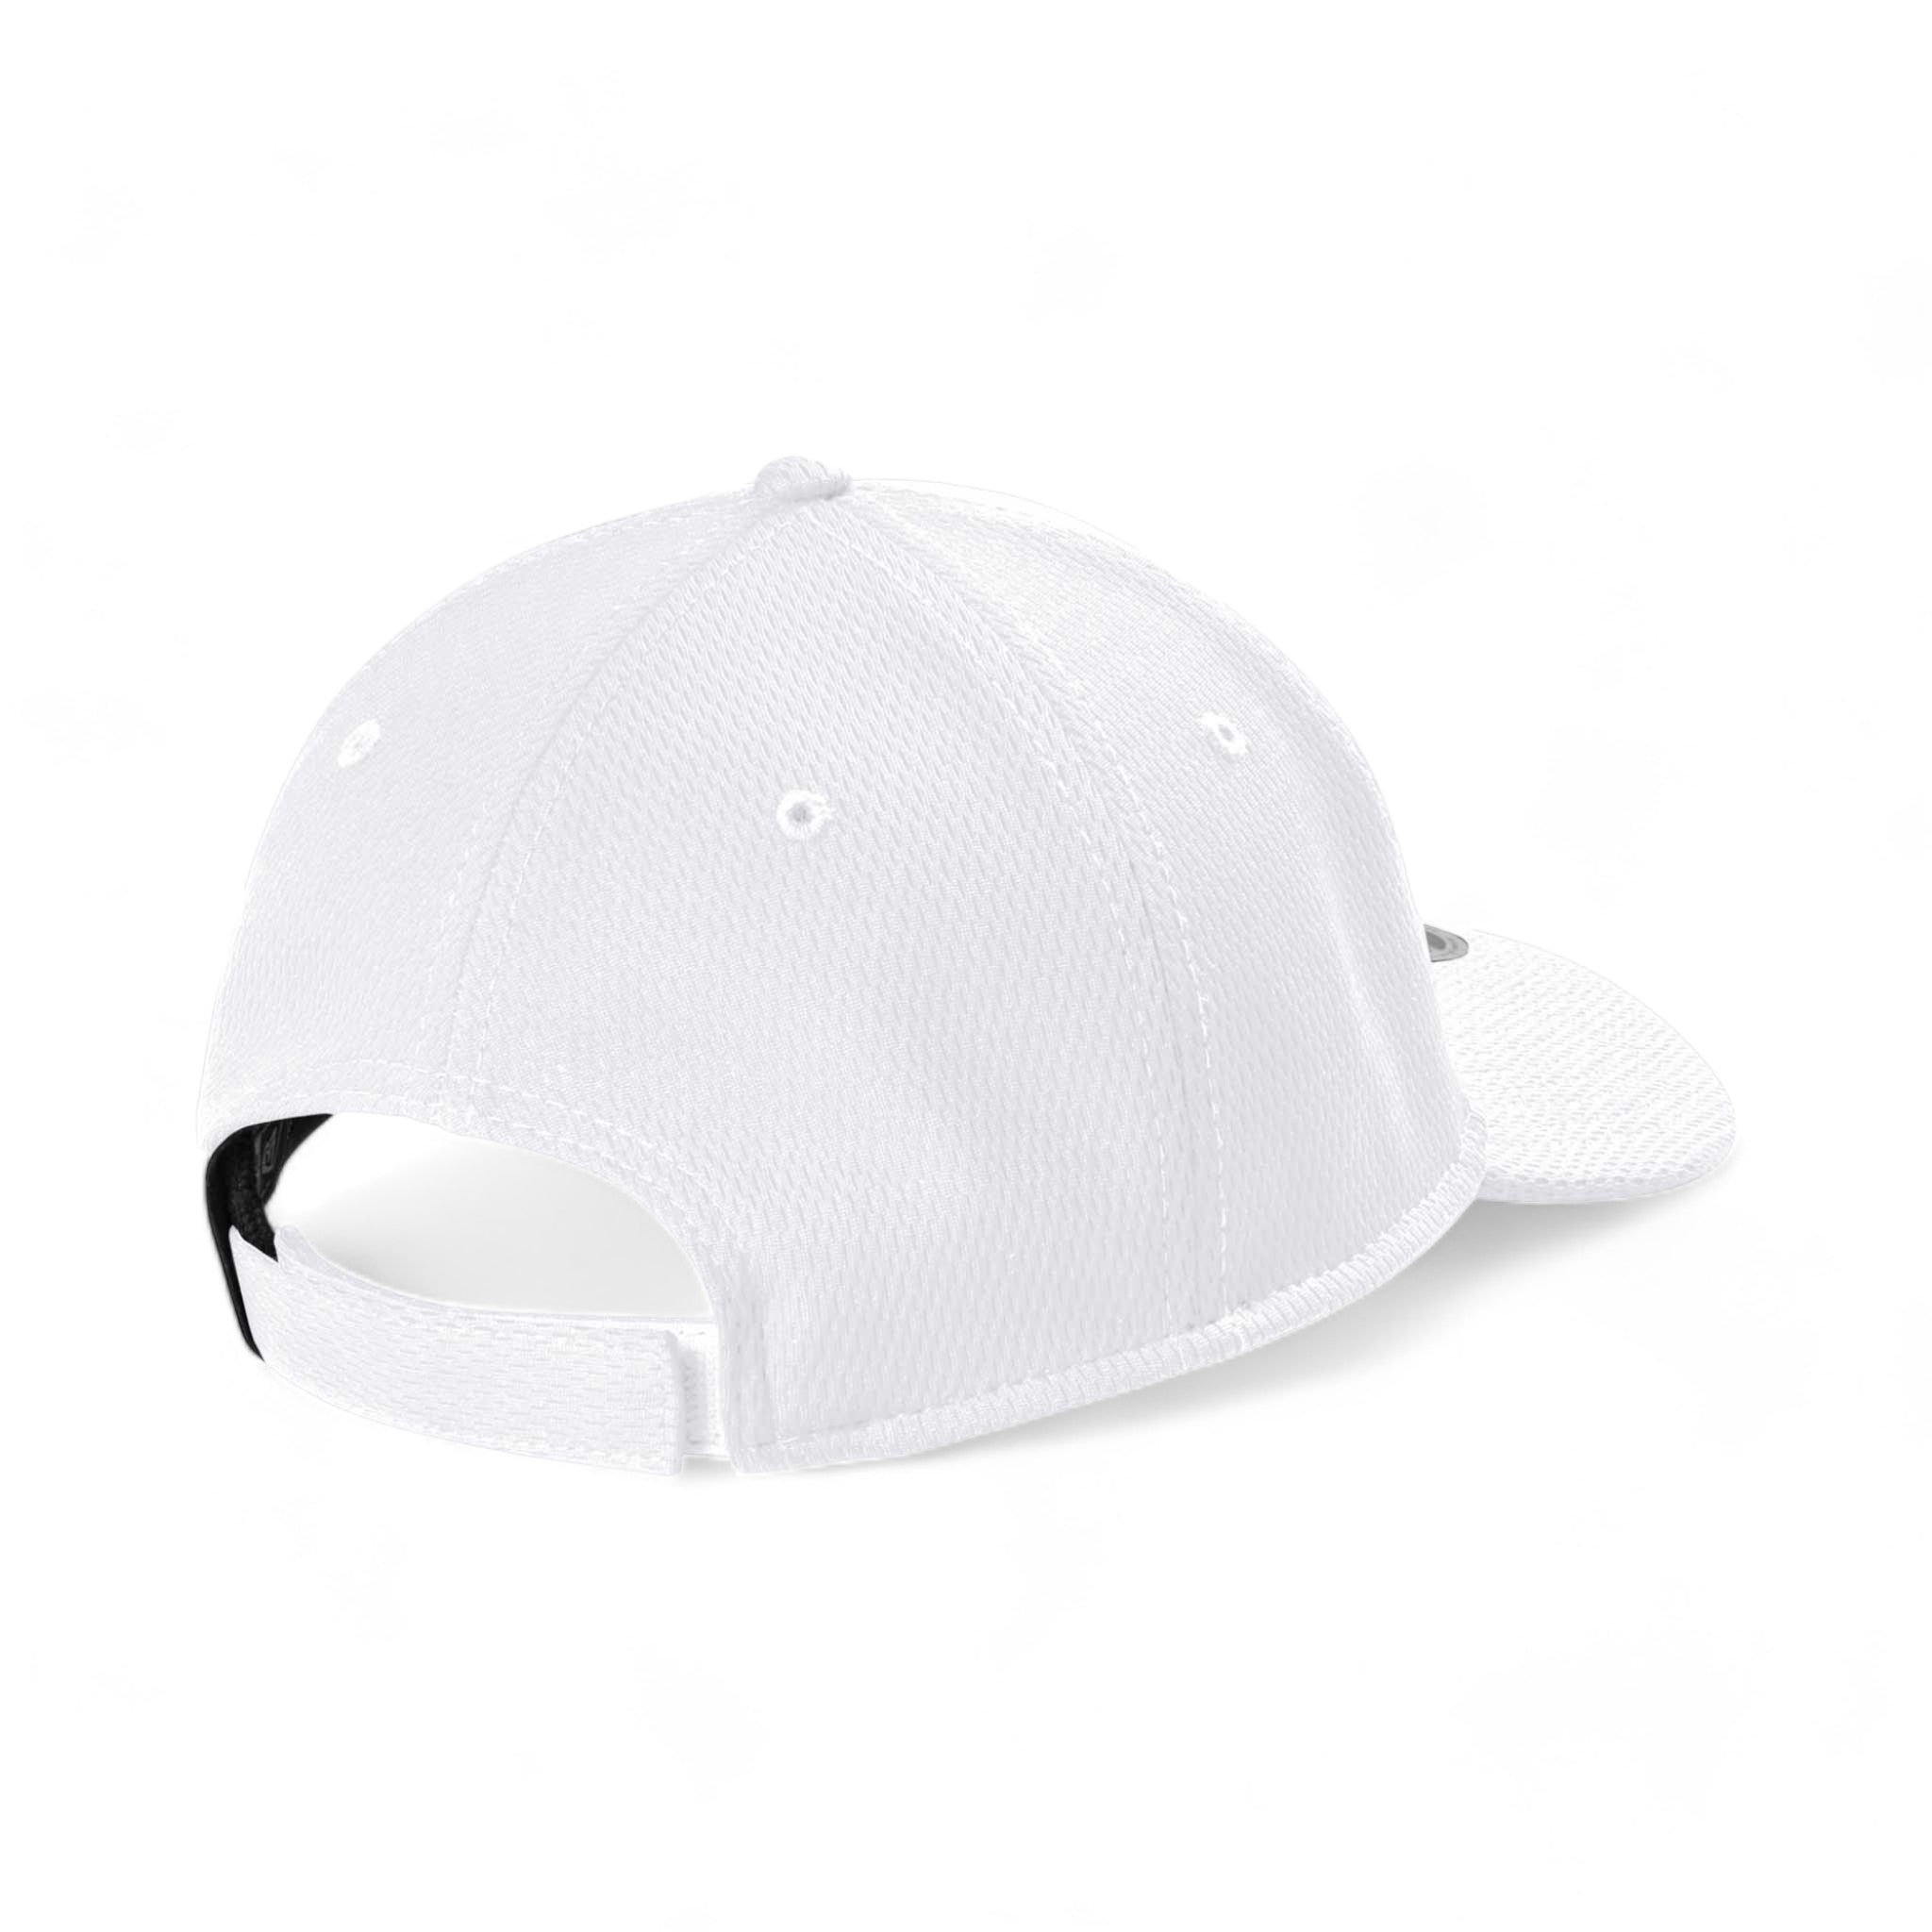 Back view of New Era NE209 custom hat in white